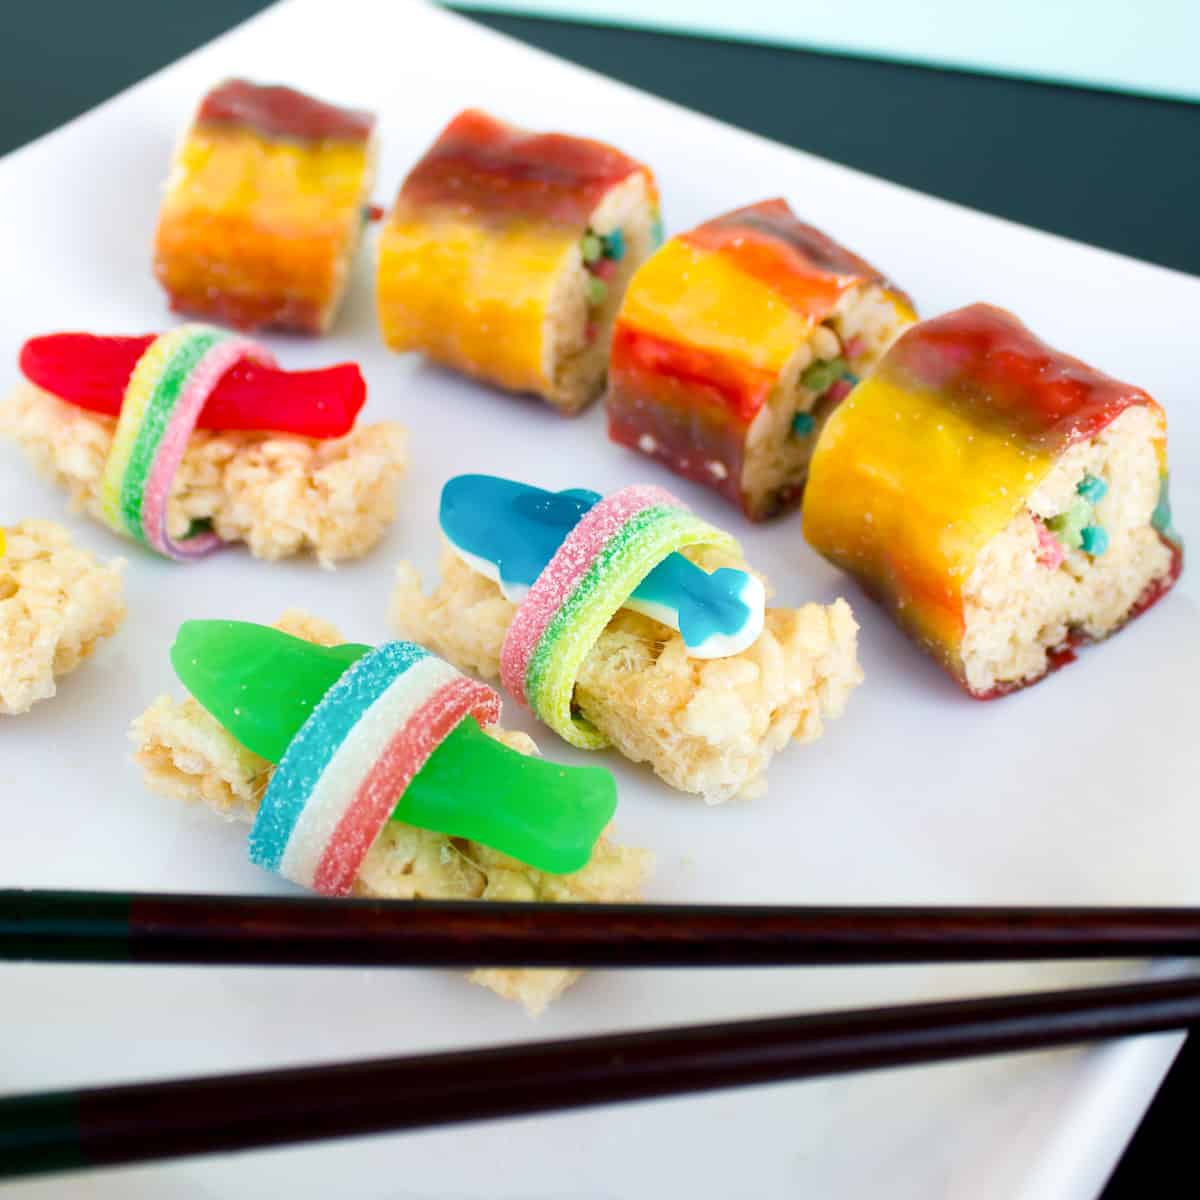 Candy Sushi - California Rolls and Nigiri Sushi - recipe and directions